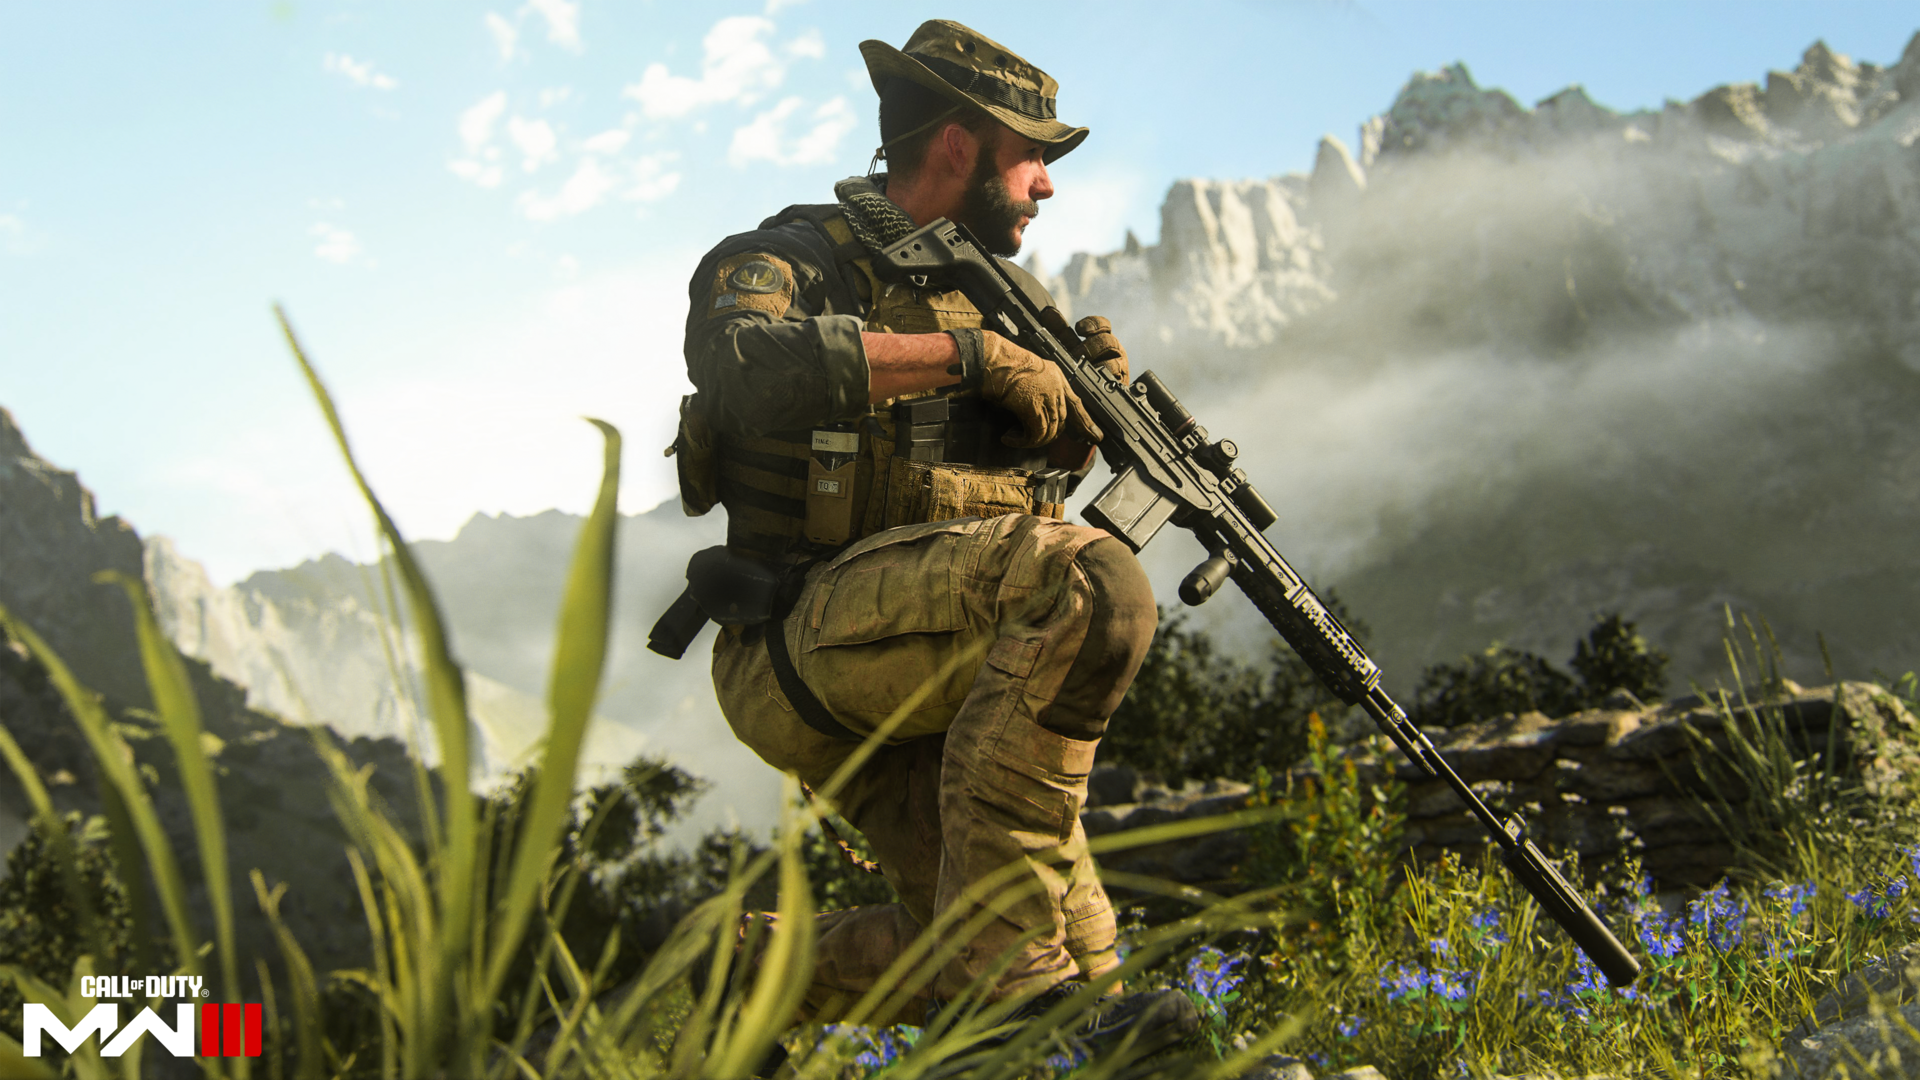 It's a cashgrab and a farce: Call of Duty: Modern Warfare 3